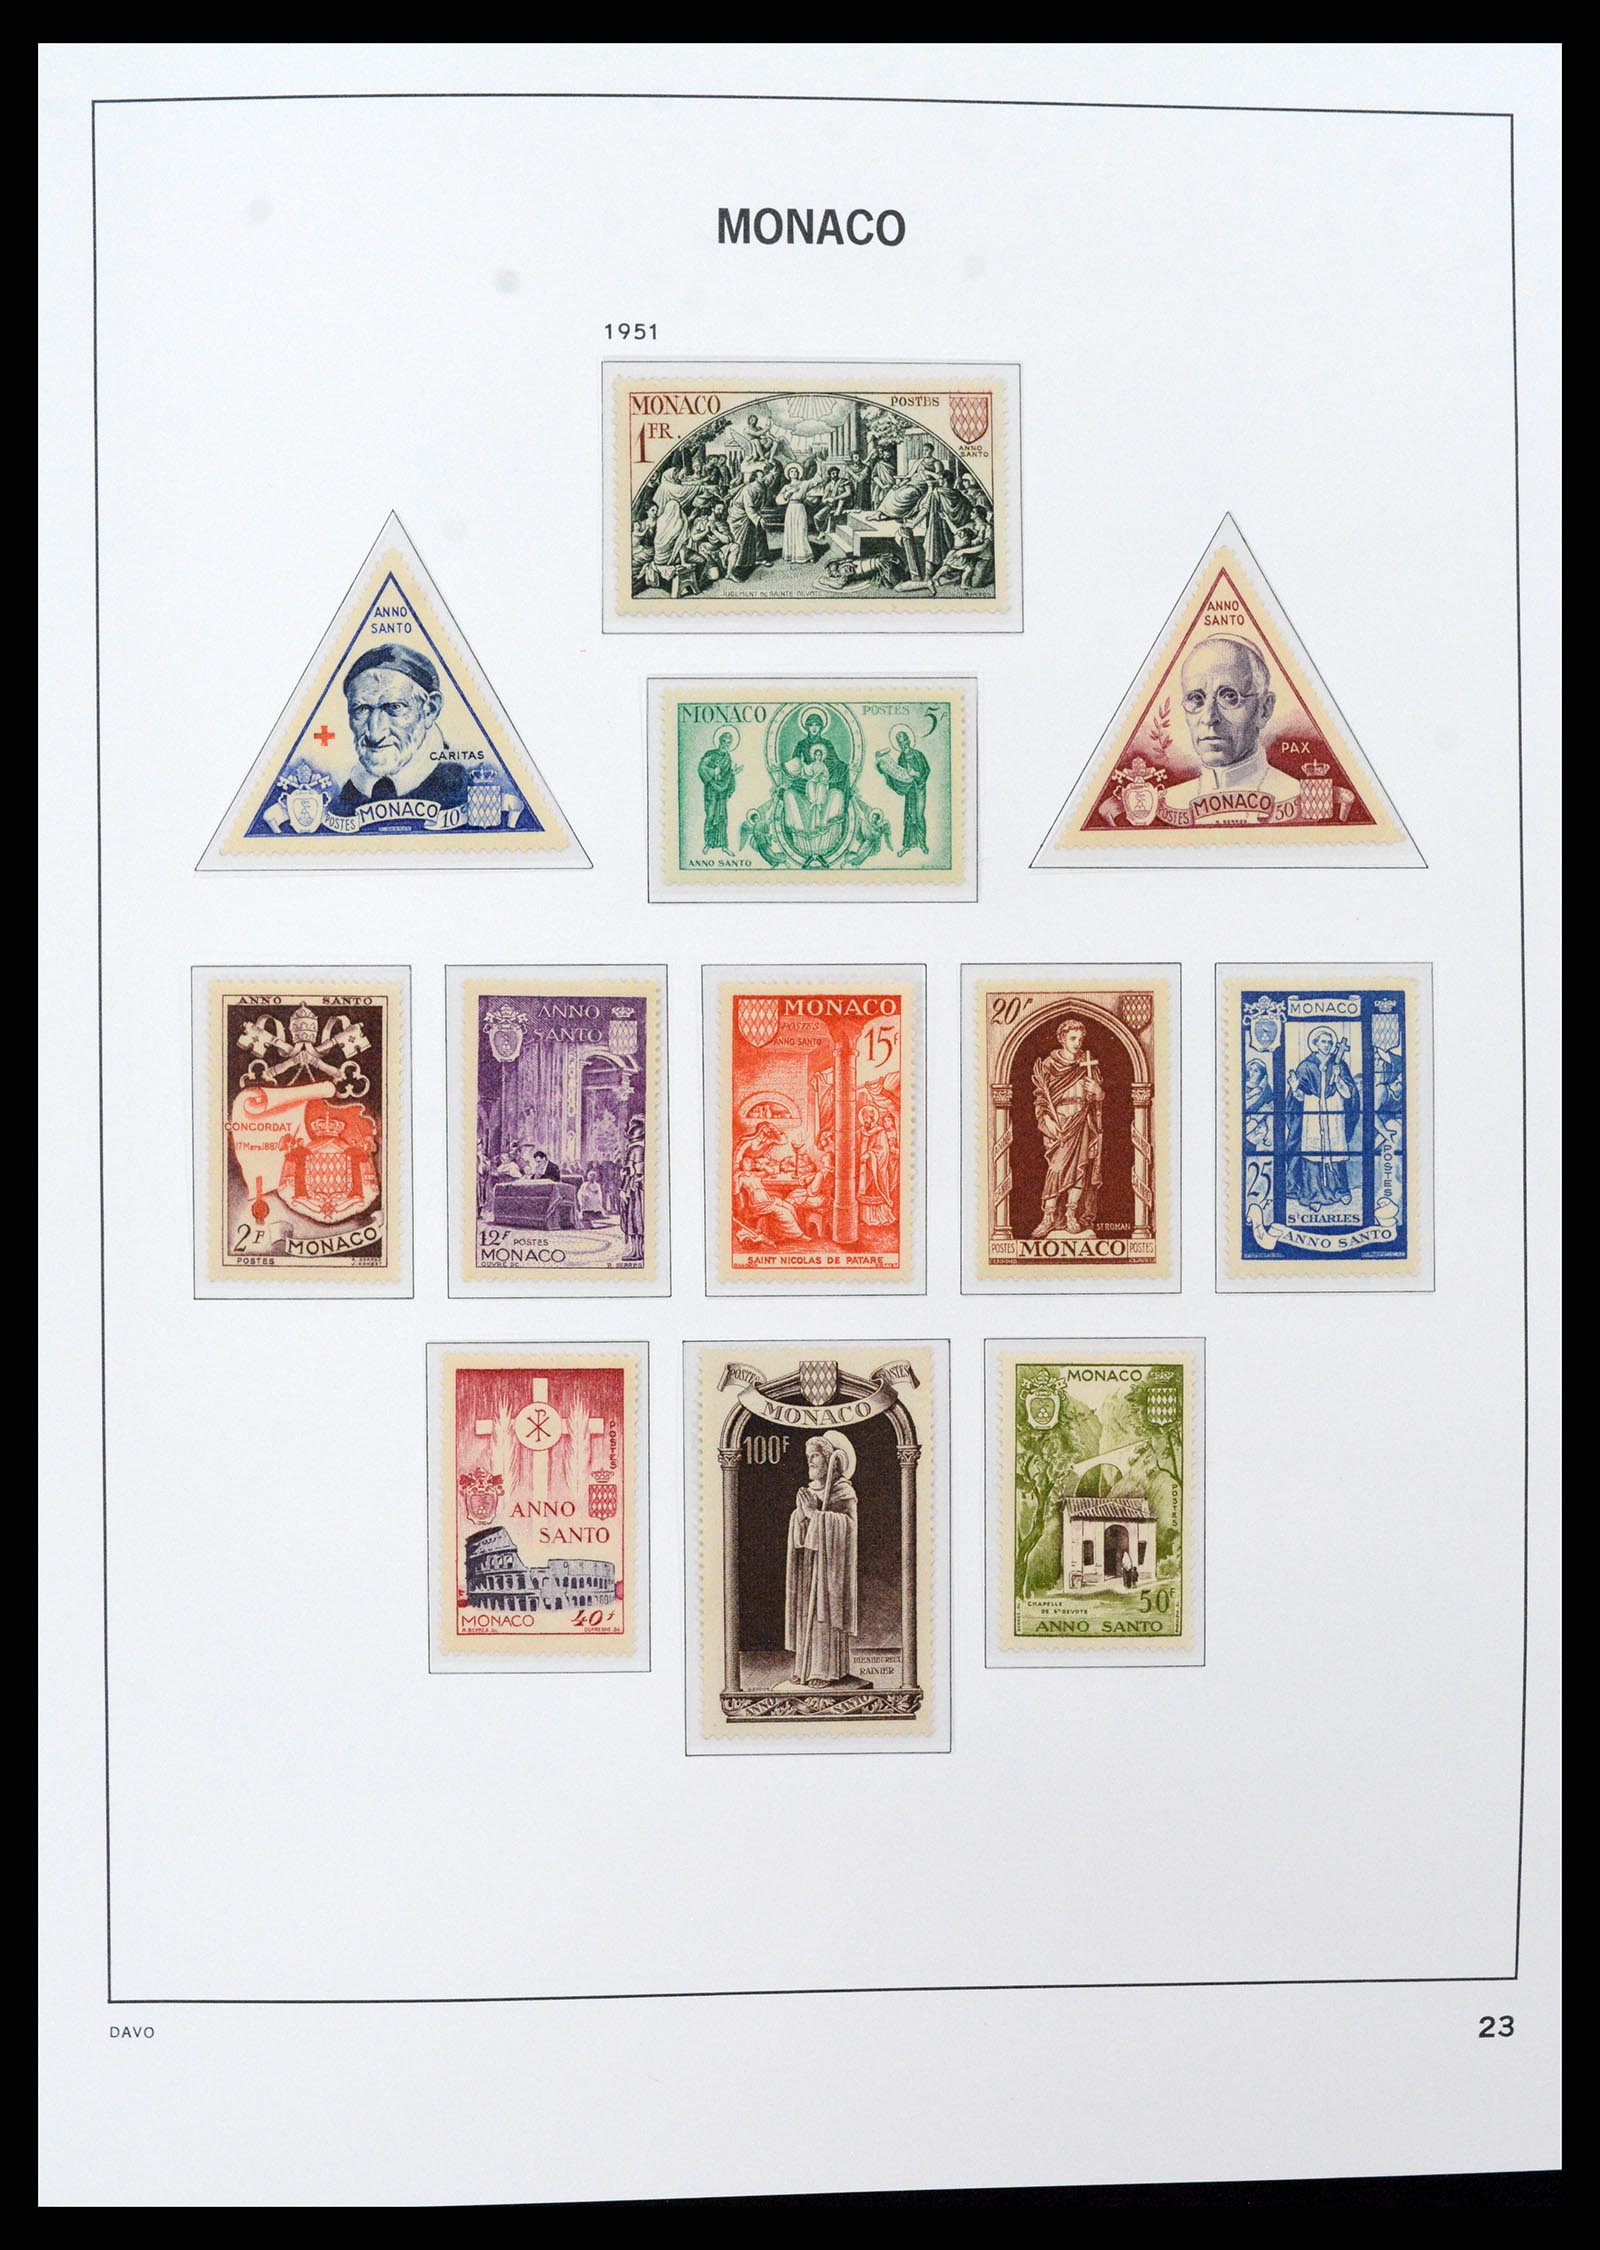 37279 023 - Stamp collection 37279 Monaco 1885-1969.